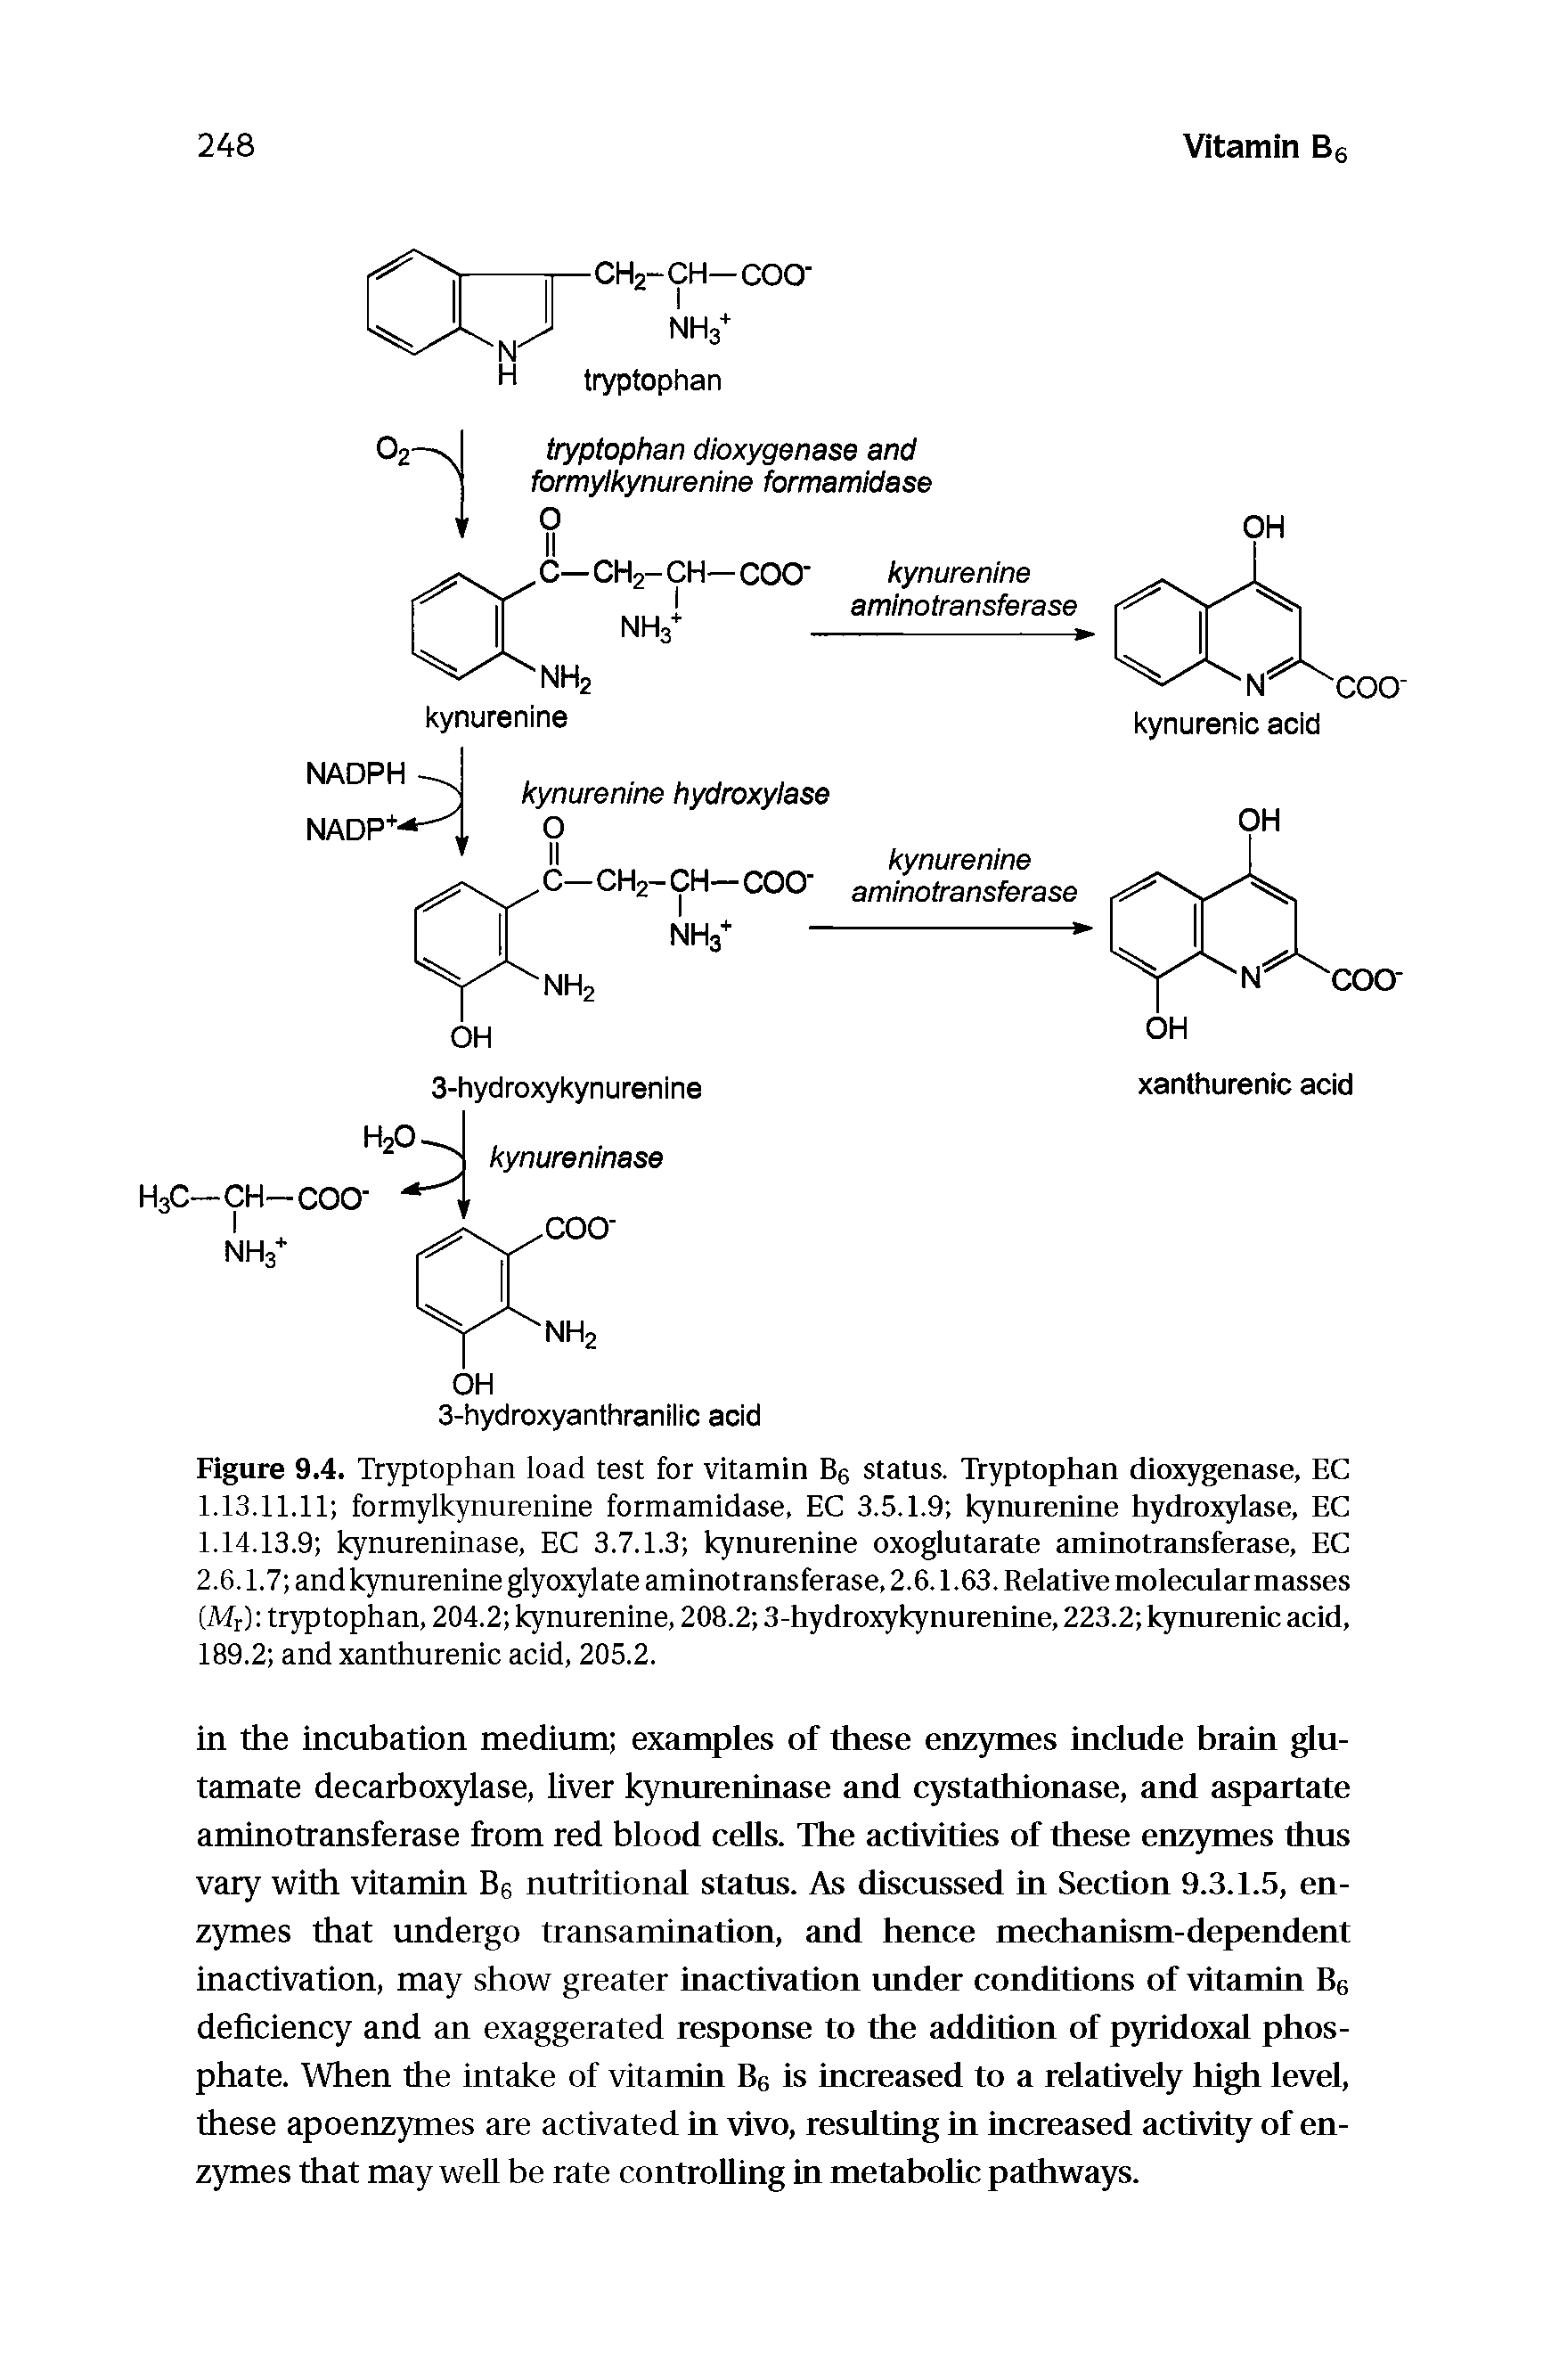 Figure 9.4. Tryptophan load test for vitamin Be status. Tryptophan dioxygenase, EC 1.13.11.11 formylkynurenine formamidase, EC 3.5.1.9 kynurenine hydroxylase, EC 1.14.13.9 kynureninase, EC 3.7.1.3 kynurenine oxoglutarate aminotransferase, EC 2.6.1.7 andkynurenine glyoxylate aminotransferase, 2.6.1.63. Relative molecular masses (Mr) tryptophan, 204.2 kynurenine, 208.2 3-hydroxykynurenine, 223.2 kynurenic acid, 189.2 and xanthurenic acid, 205.2.